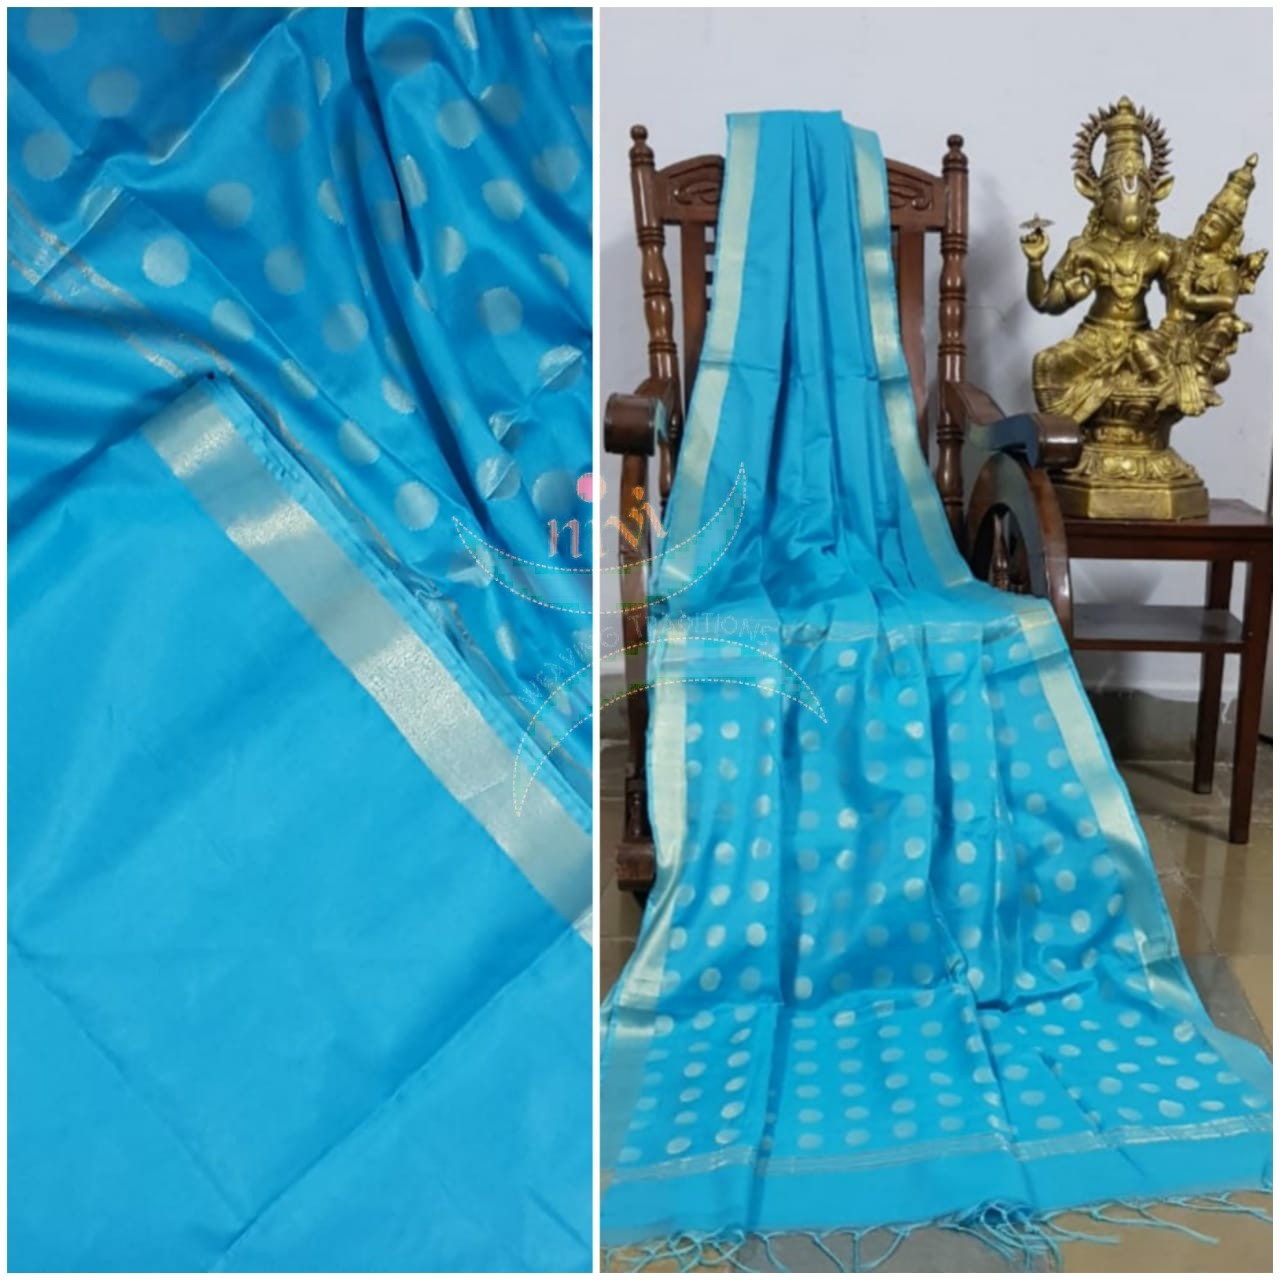 Blue Bengal handloom cotton blend with polka dots on pallu.